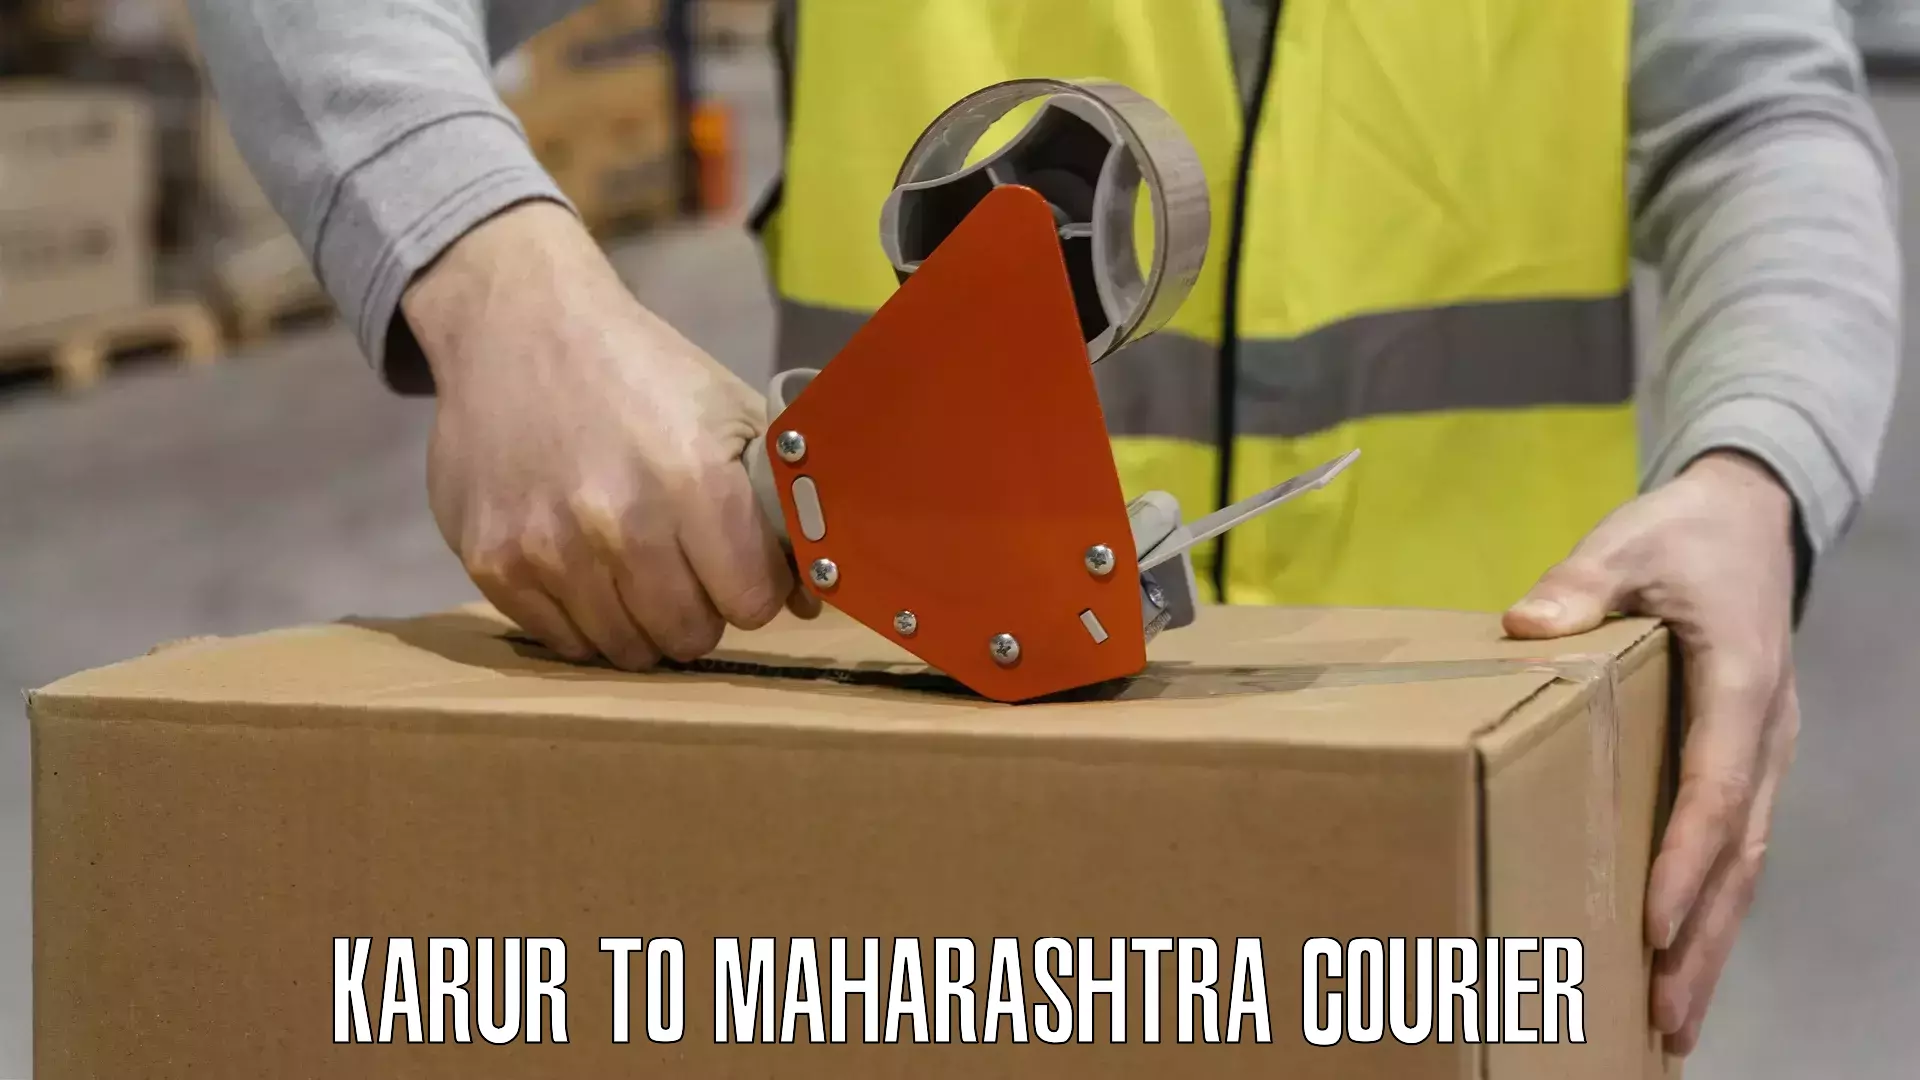 Full-service courier options Karur to Maharashtra